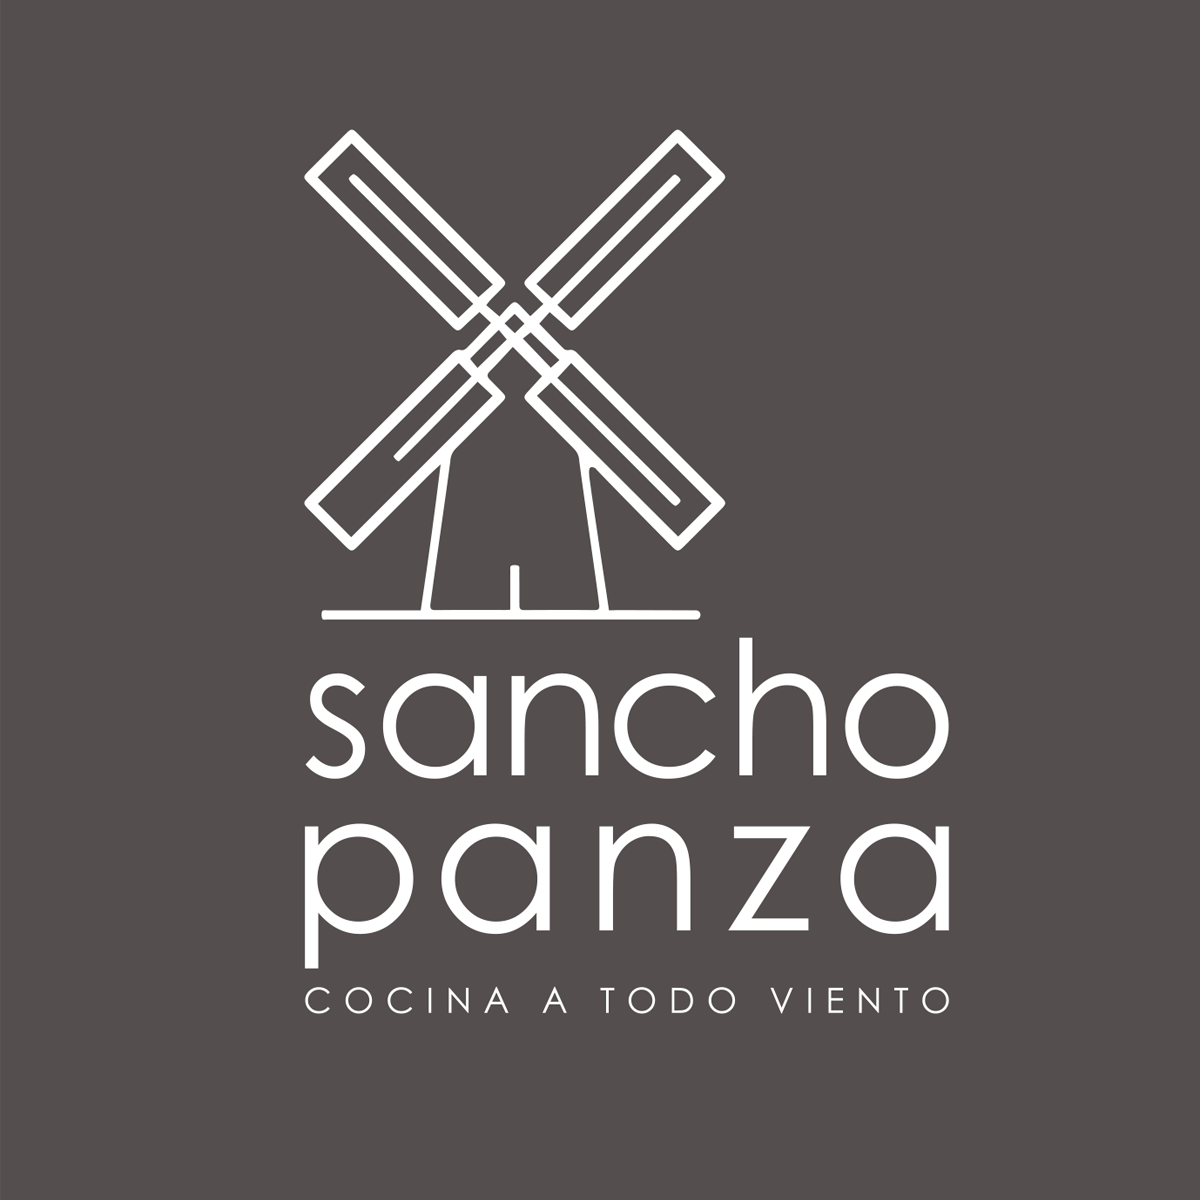 Sancho Panza Restaurante